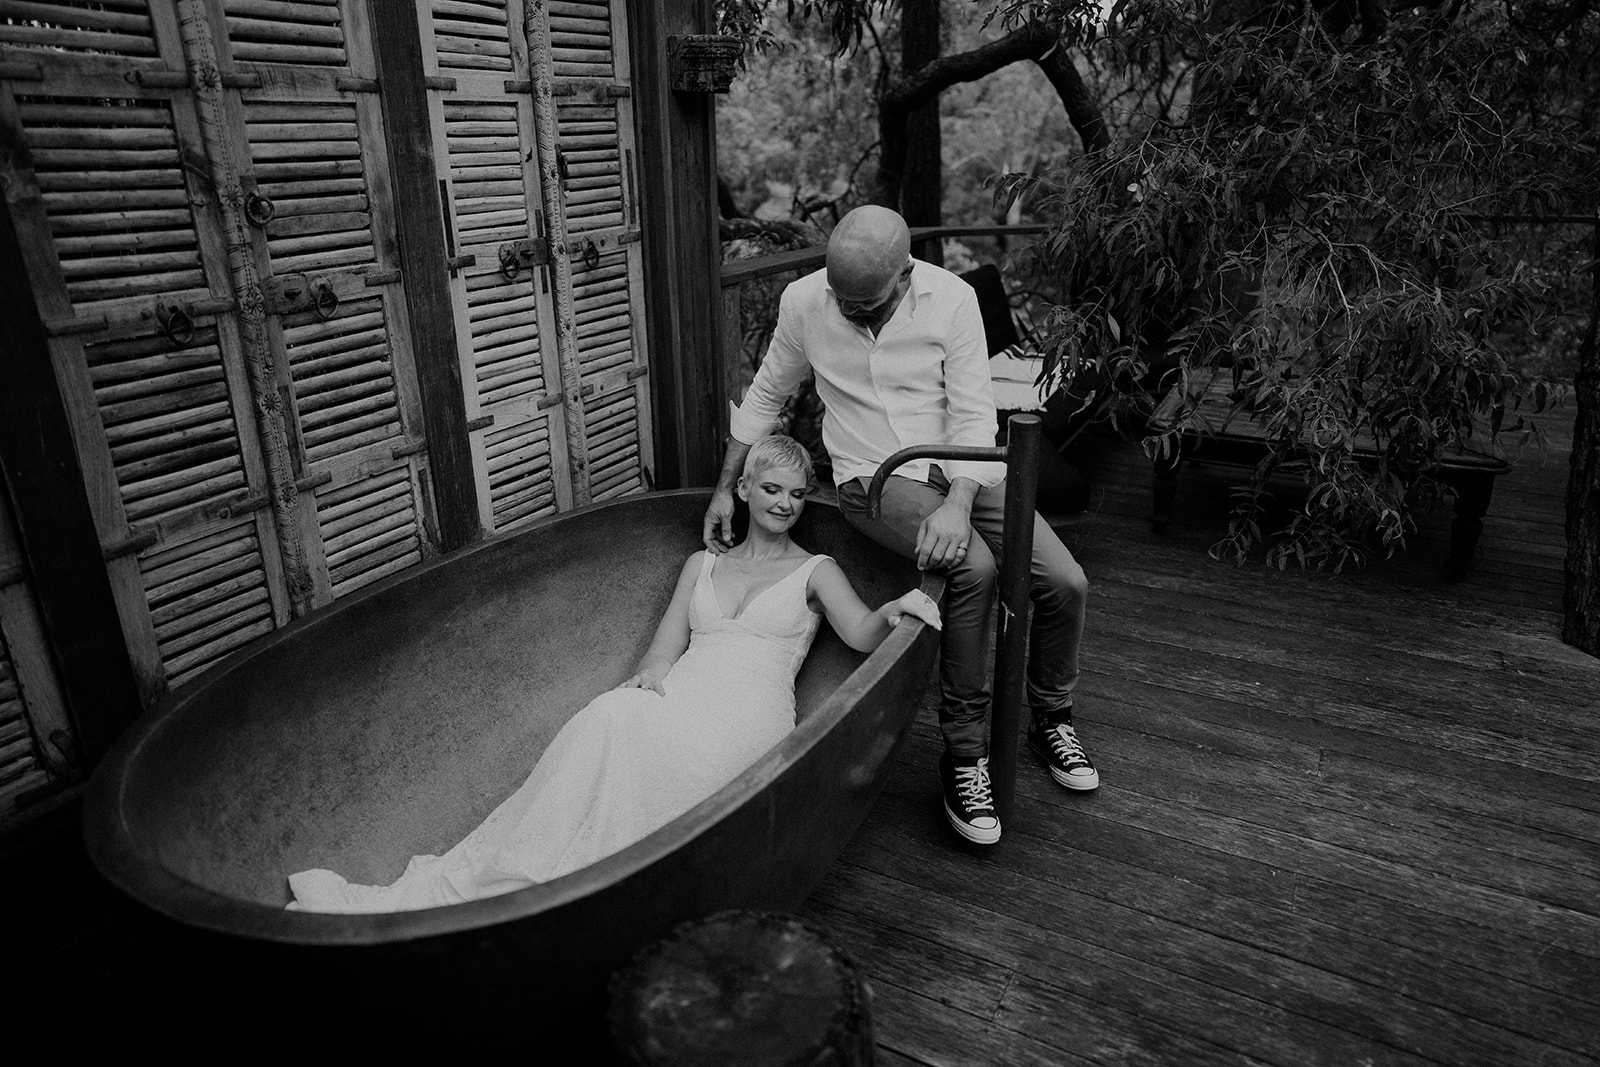 Bride and groom, having fun in an outdoor bathtub in Kangaroo Valley